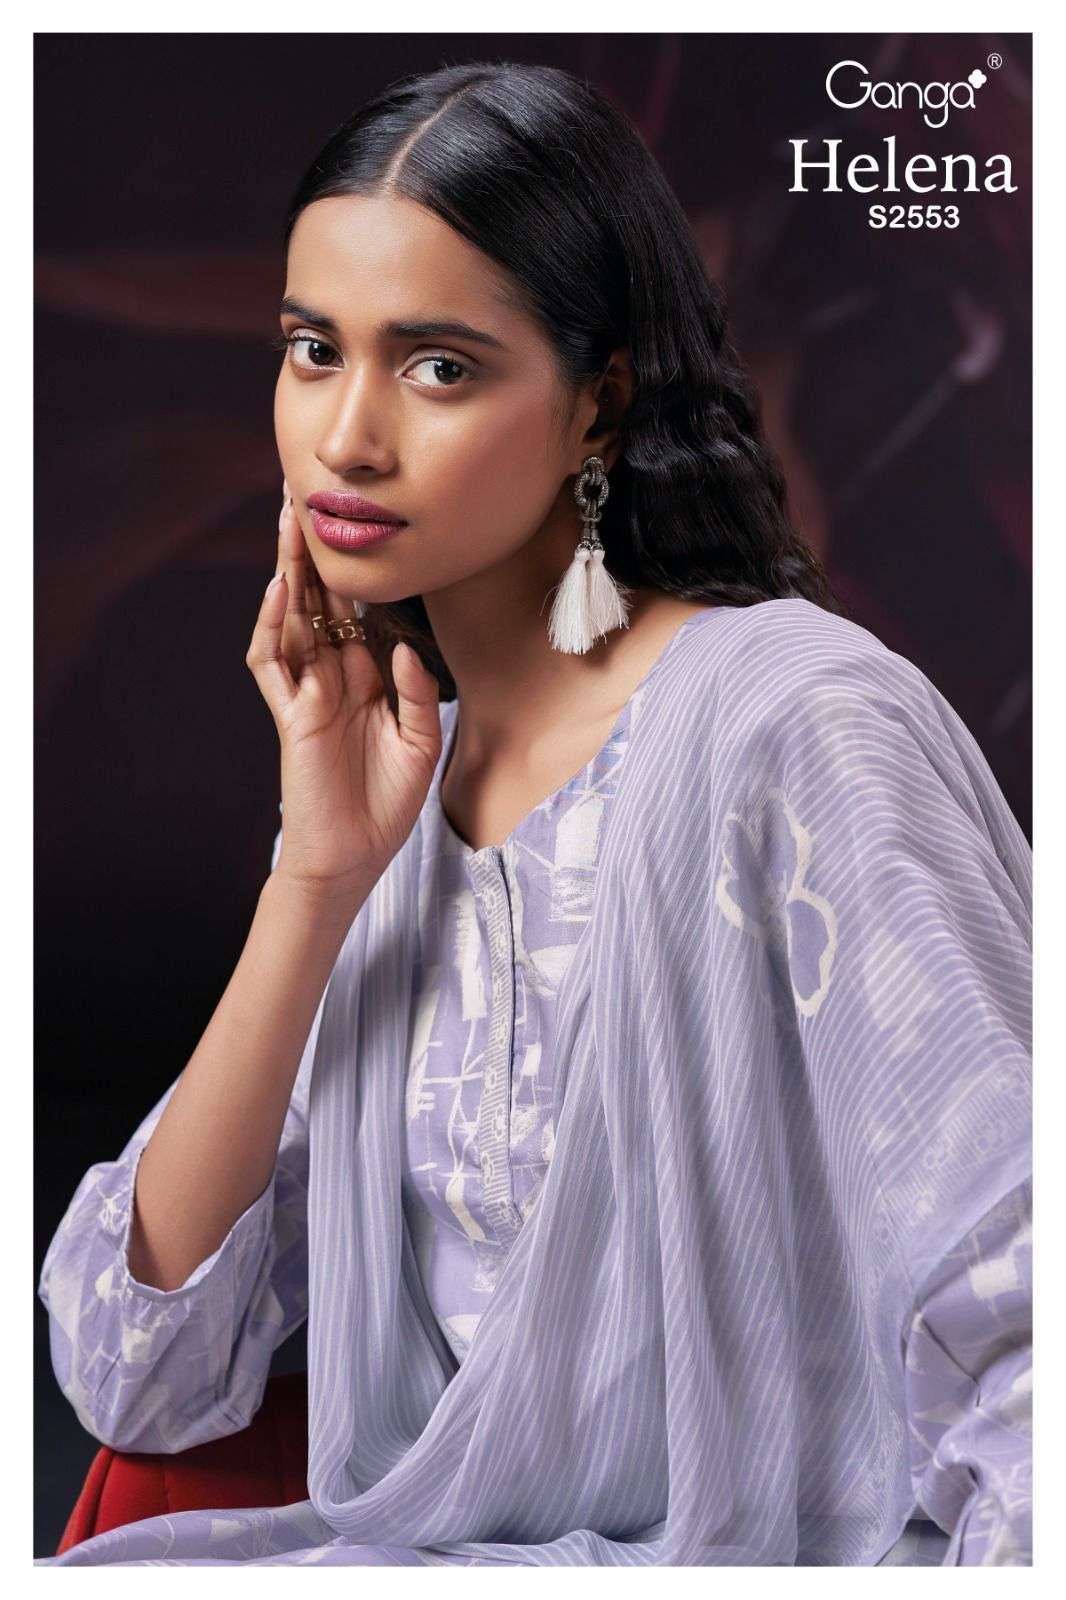 Ganga Helena 2553 Premium Cotton Ladies Dress Catalog Exporters